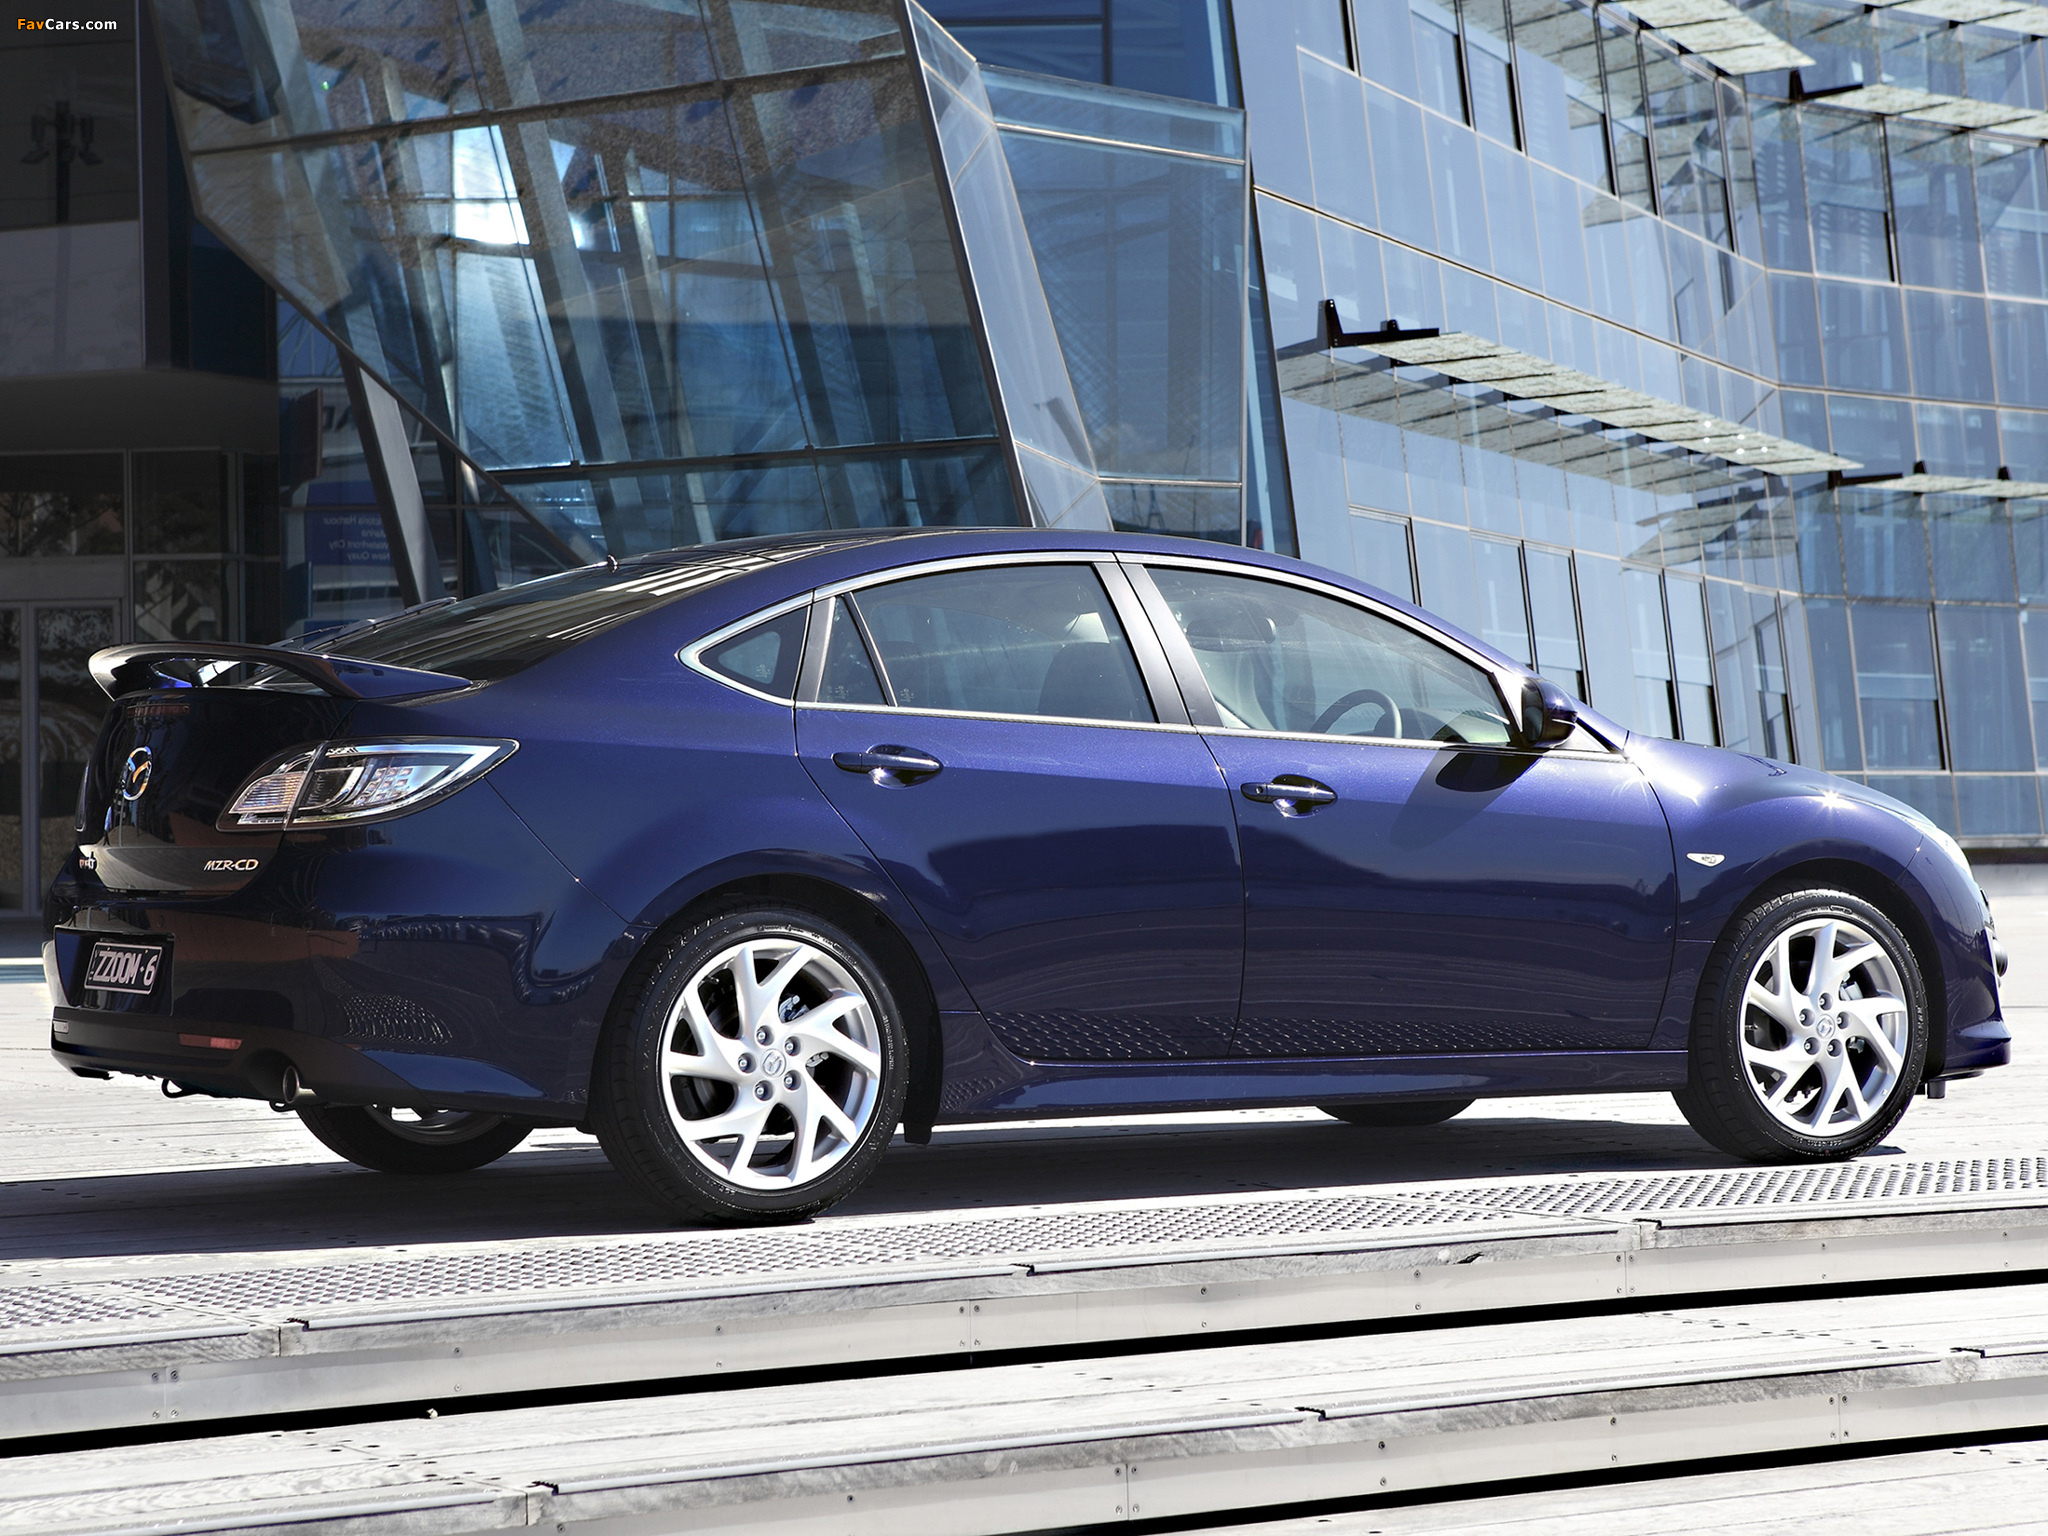 Мазда 6 ру. Mazda 6 Hatchback. Мазда 6 2010. Мазда хэтчбек 6 хэтчбек. Мазда 6 хэтчбек синяя.